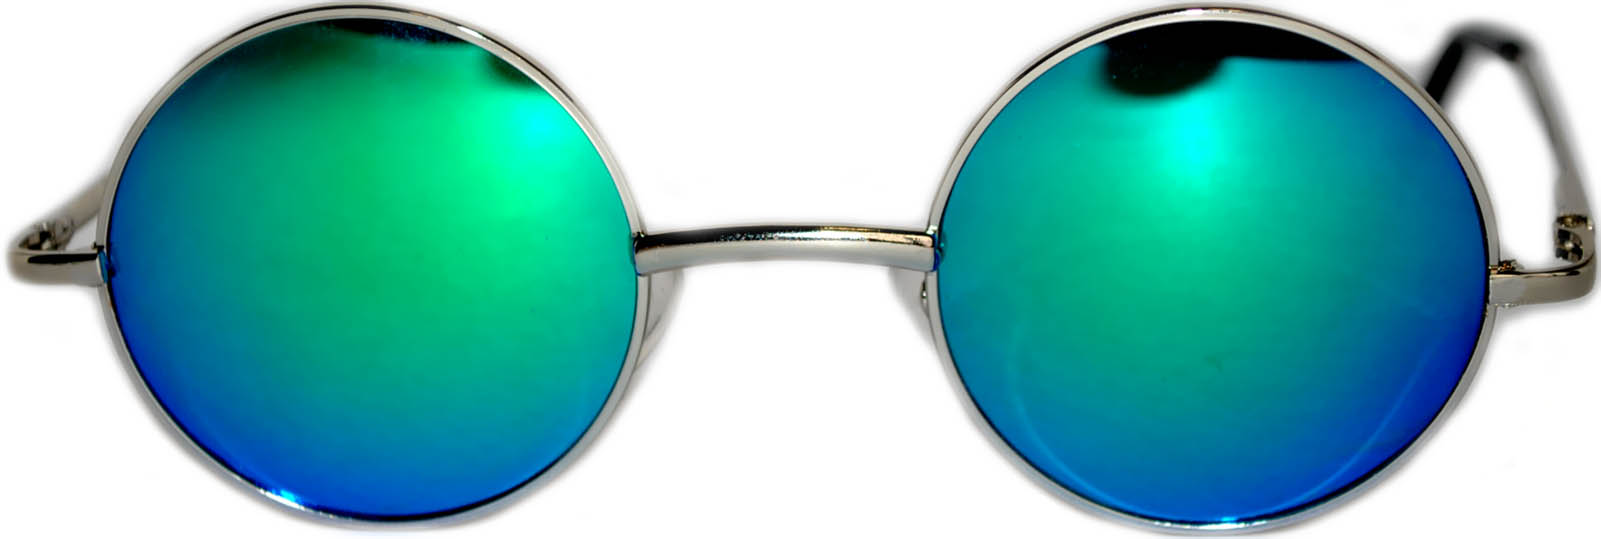 OWL ® Eyewear Sunglasses 43mm Women’s Metal Round Circle Silver Frame Mirror Blue-Green Lens One Pair - image 2 of 2